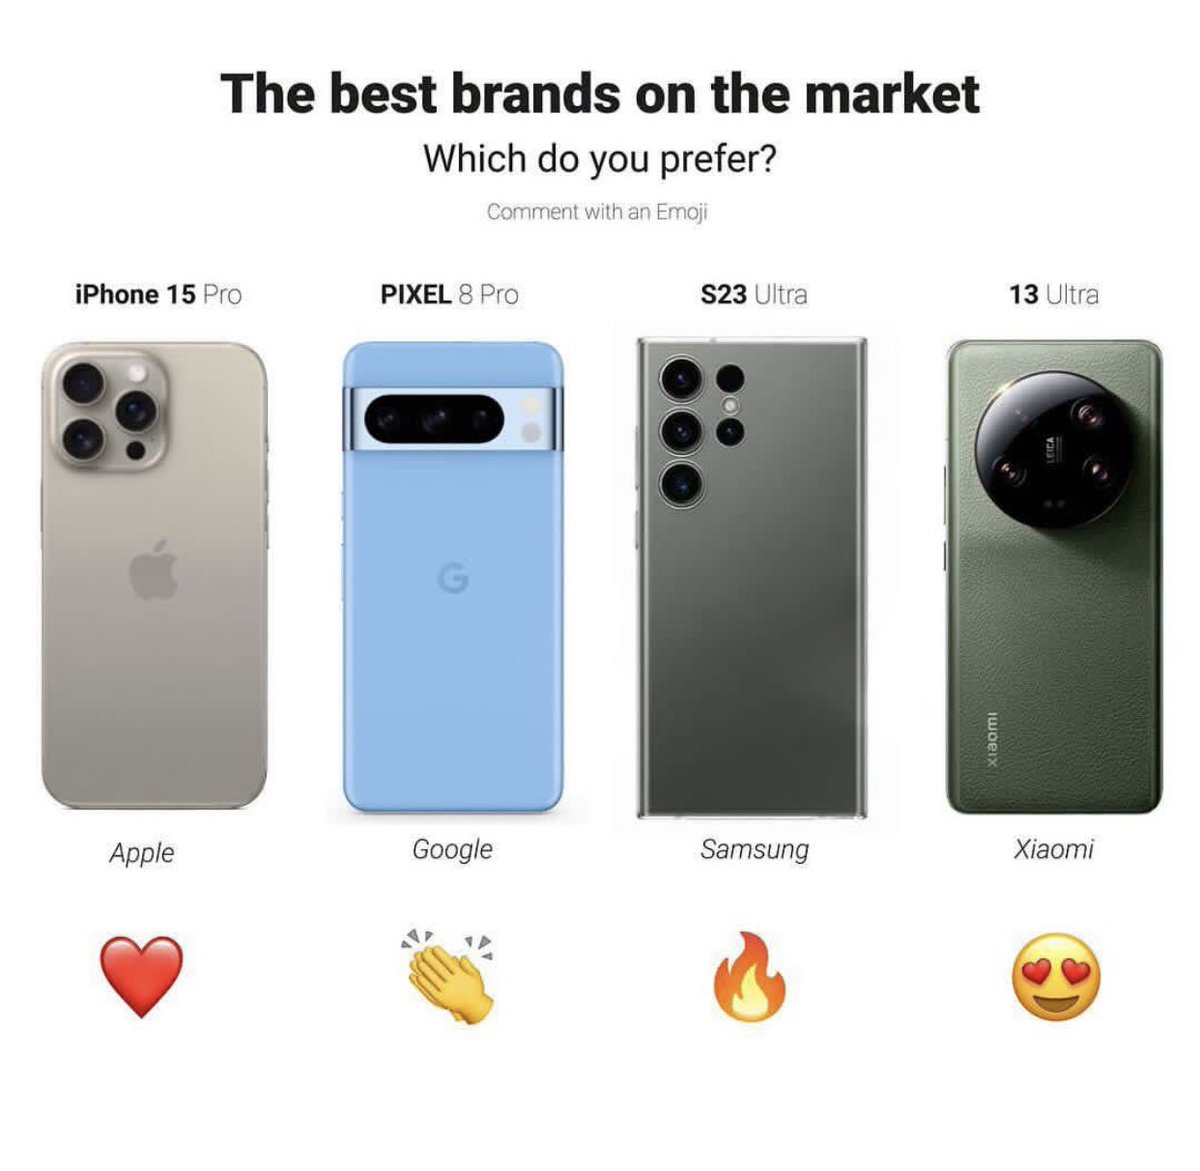 Which Smartphone brand do you prefer?